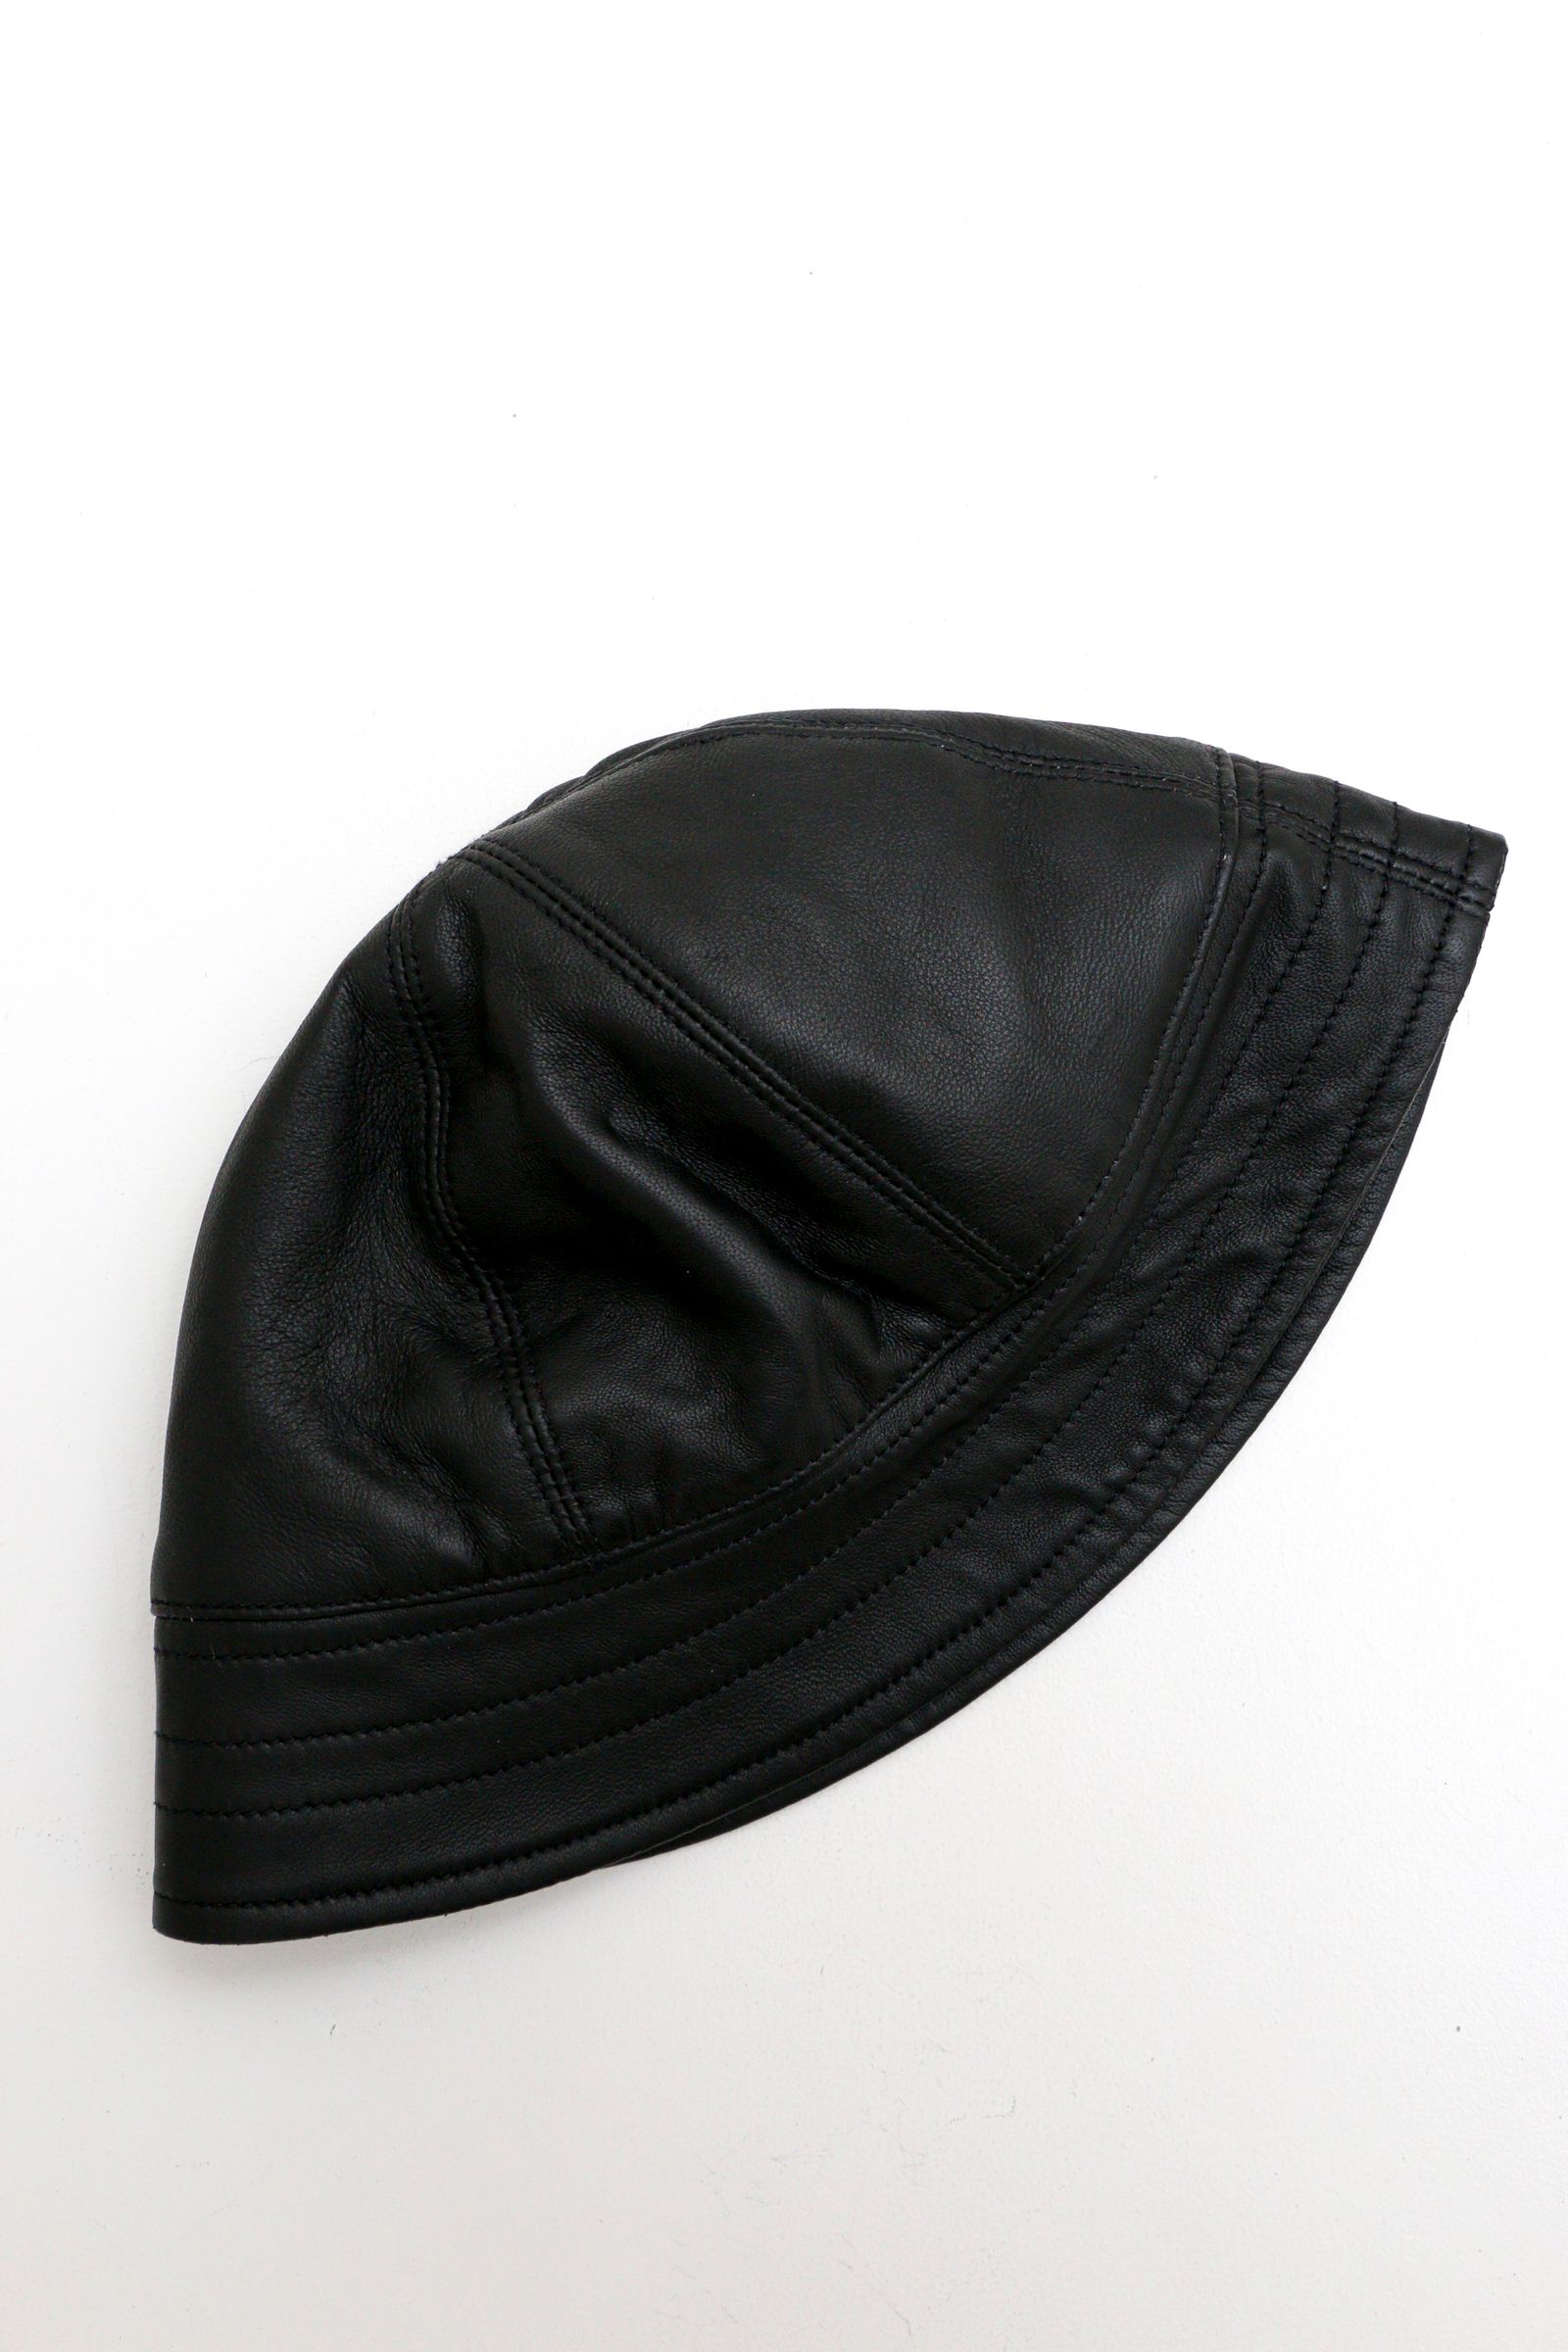 CCU - MARINE HAT SHEEP SKIN / Black | koko